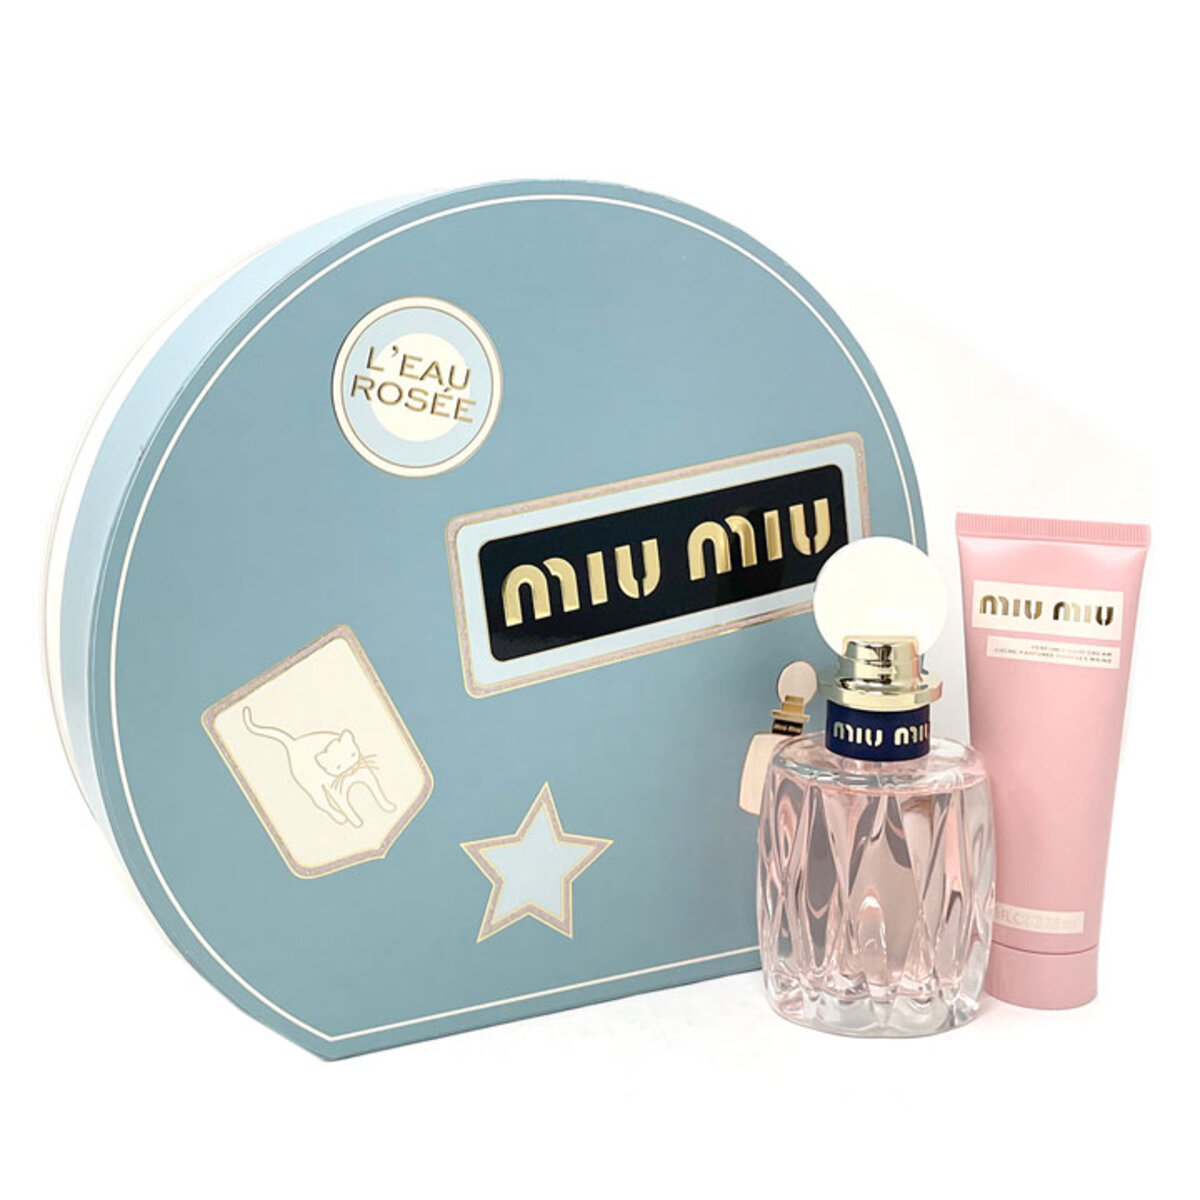 Miu Miu L'eau Rose Eau de Toilette & Hand Cream Gift Set, 100ml + 75ml